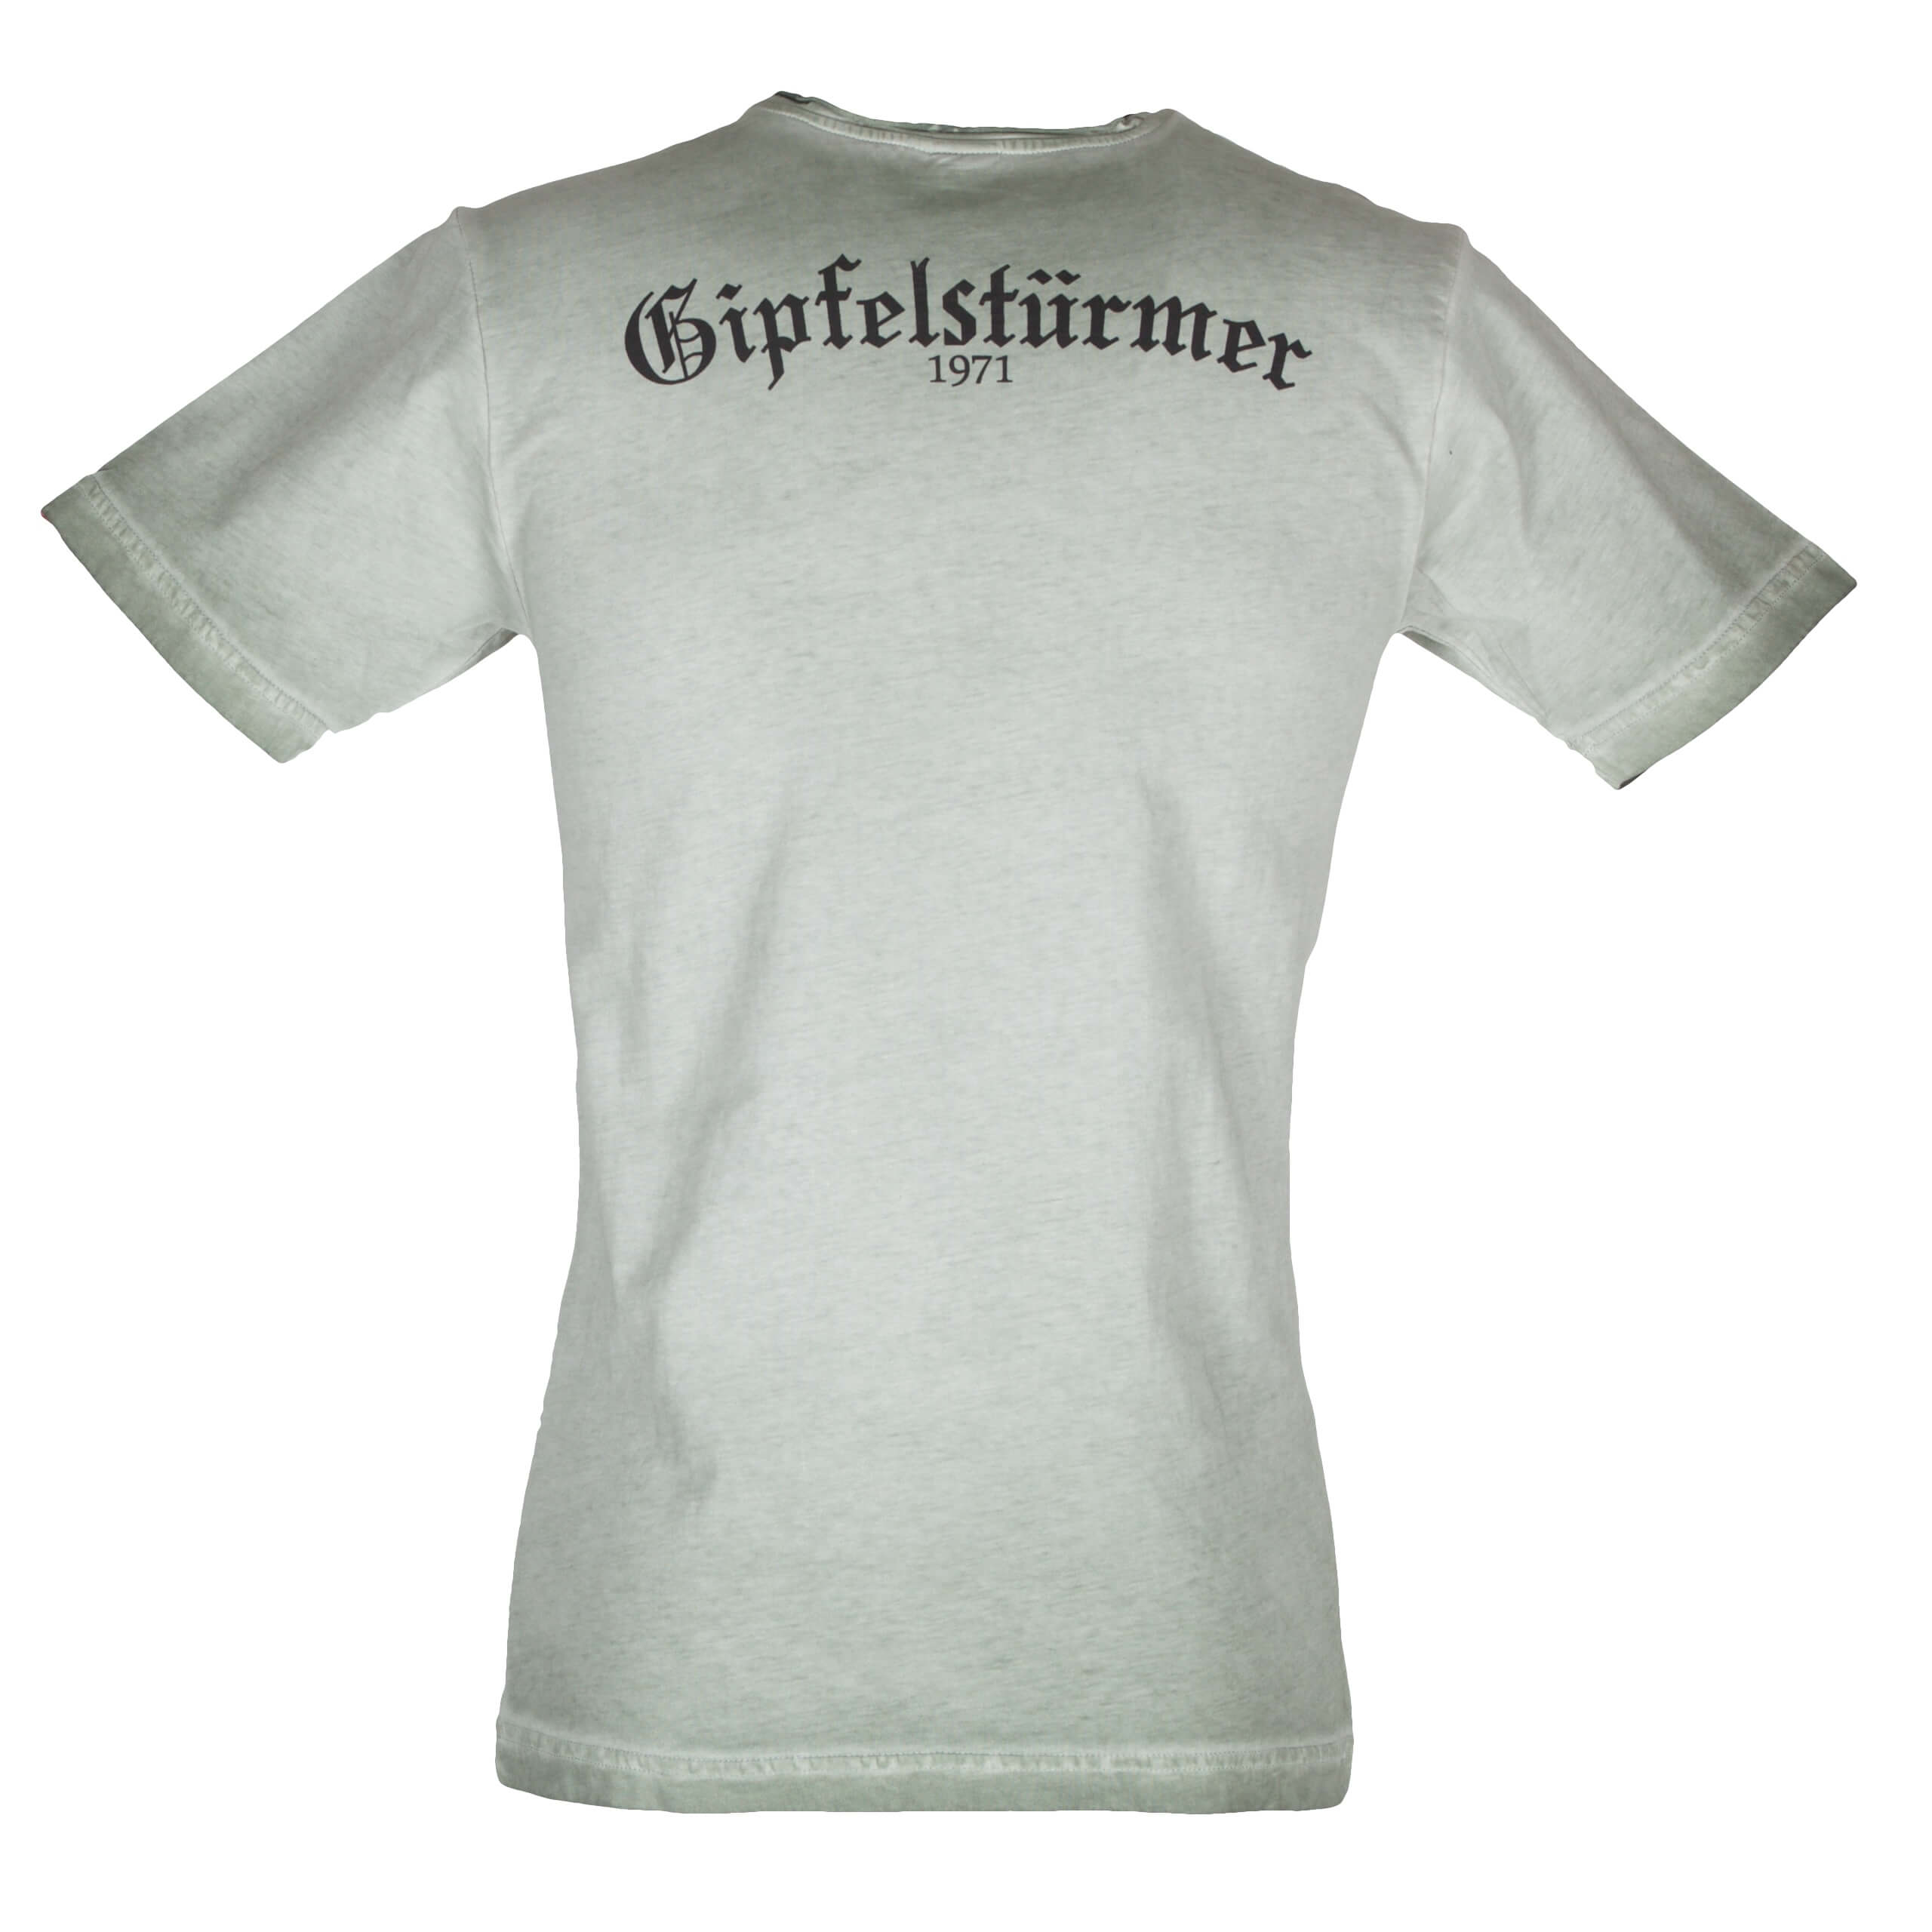 Orbis Herren T-Shirt 428000 3737 Gr S khaki Fb 54